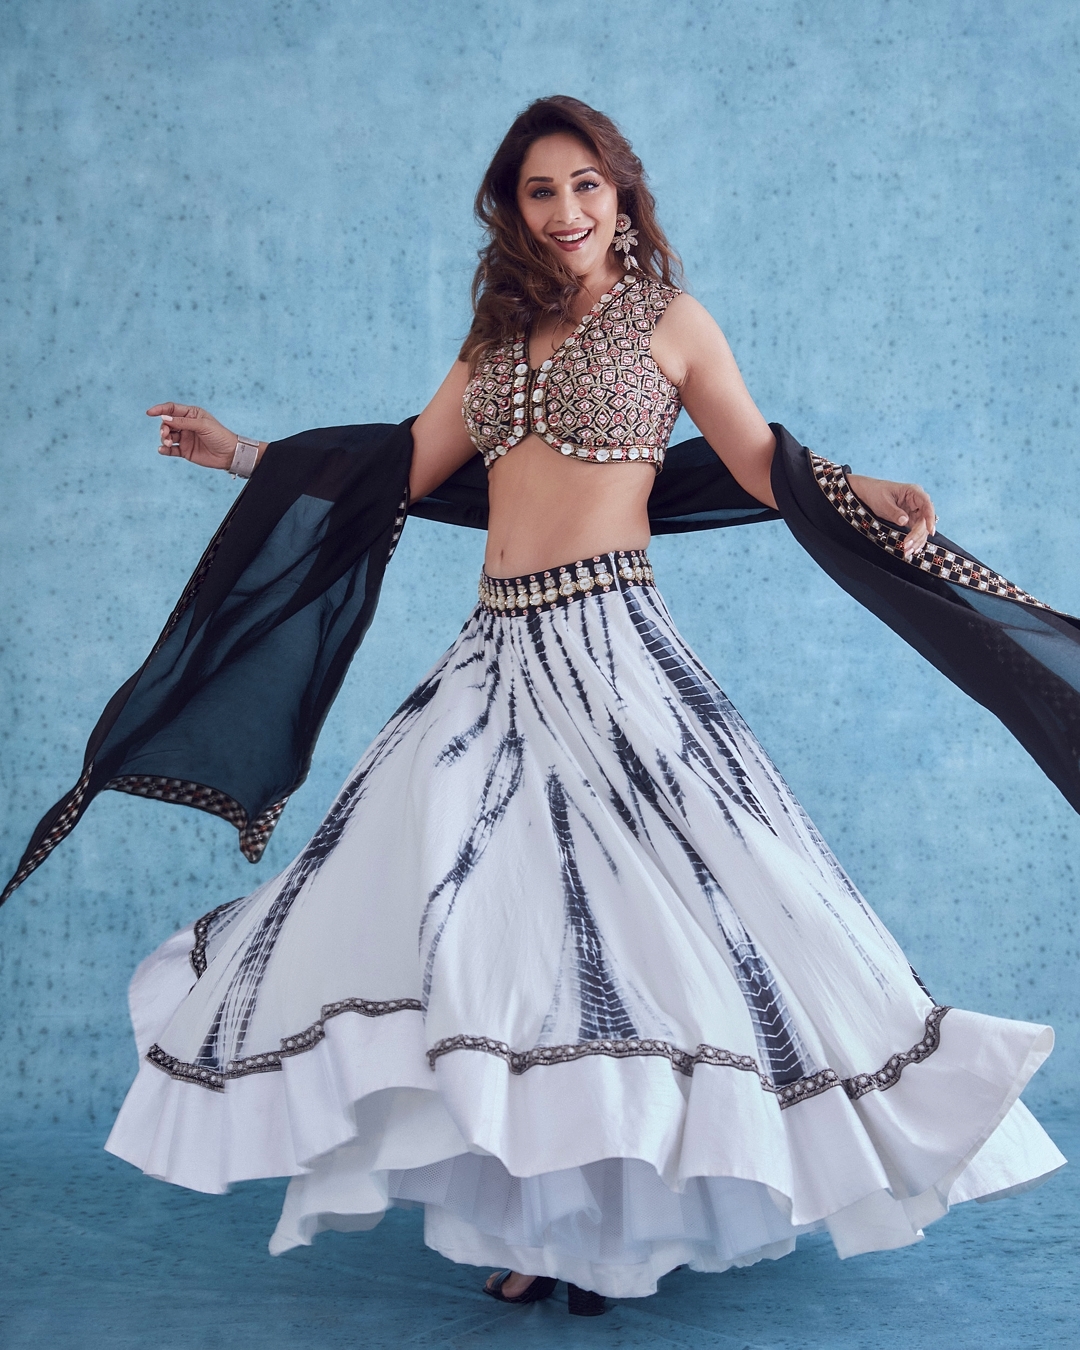 Madhuri Dixit Nene Looks Fabulous In Tie-And-Dye Lehenga, See The Diva Slay Ethnic Fashion